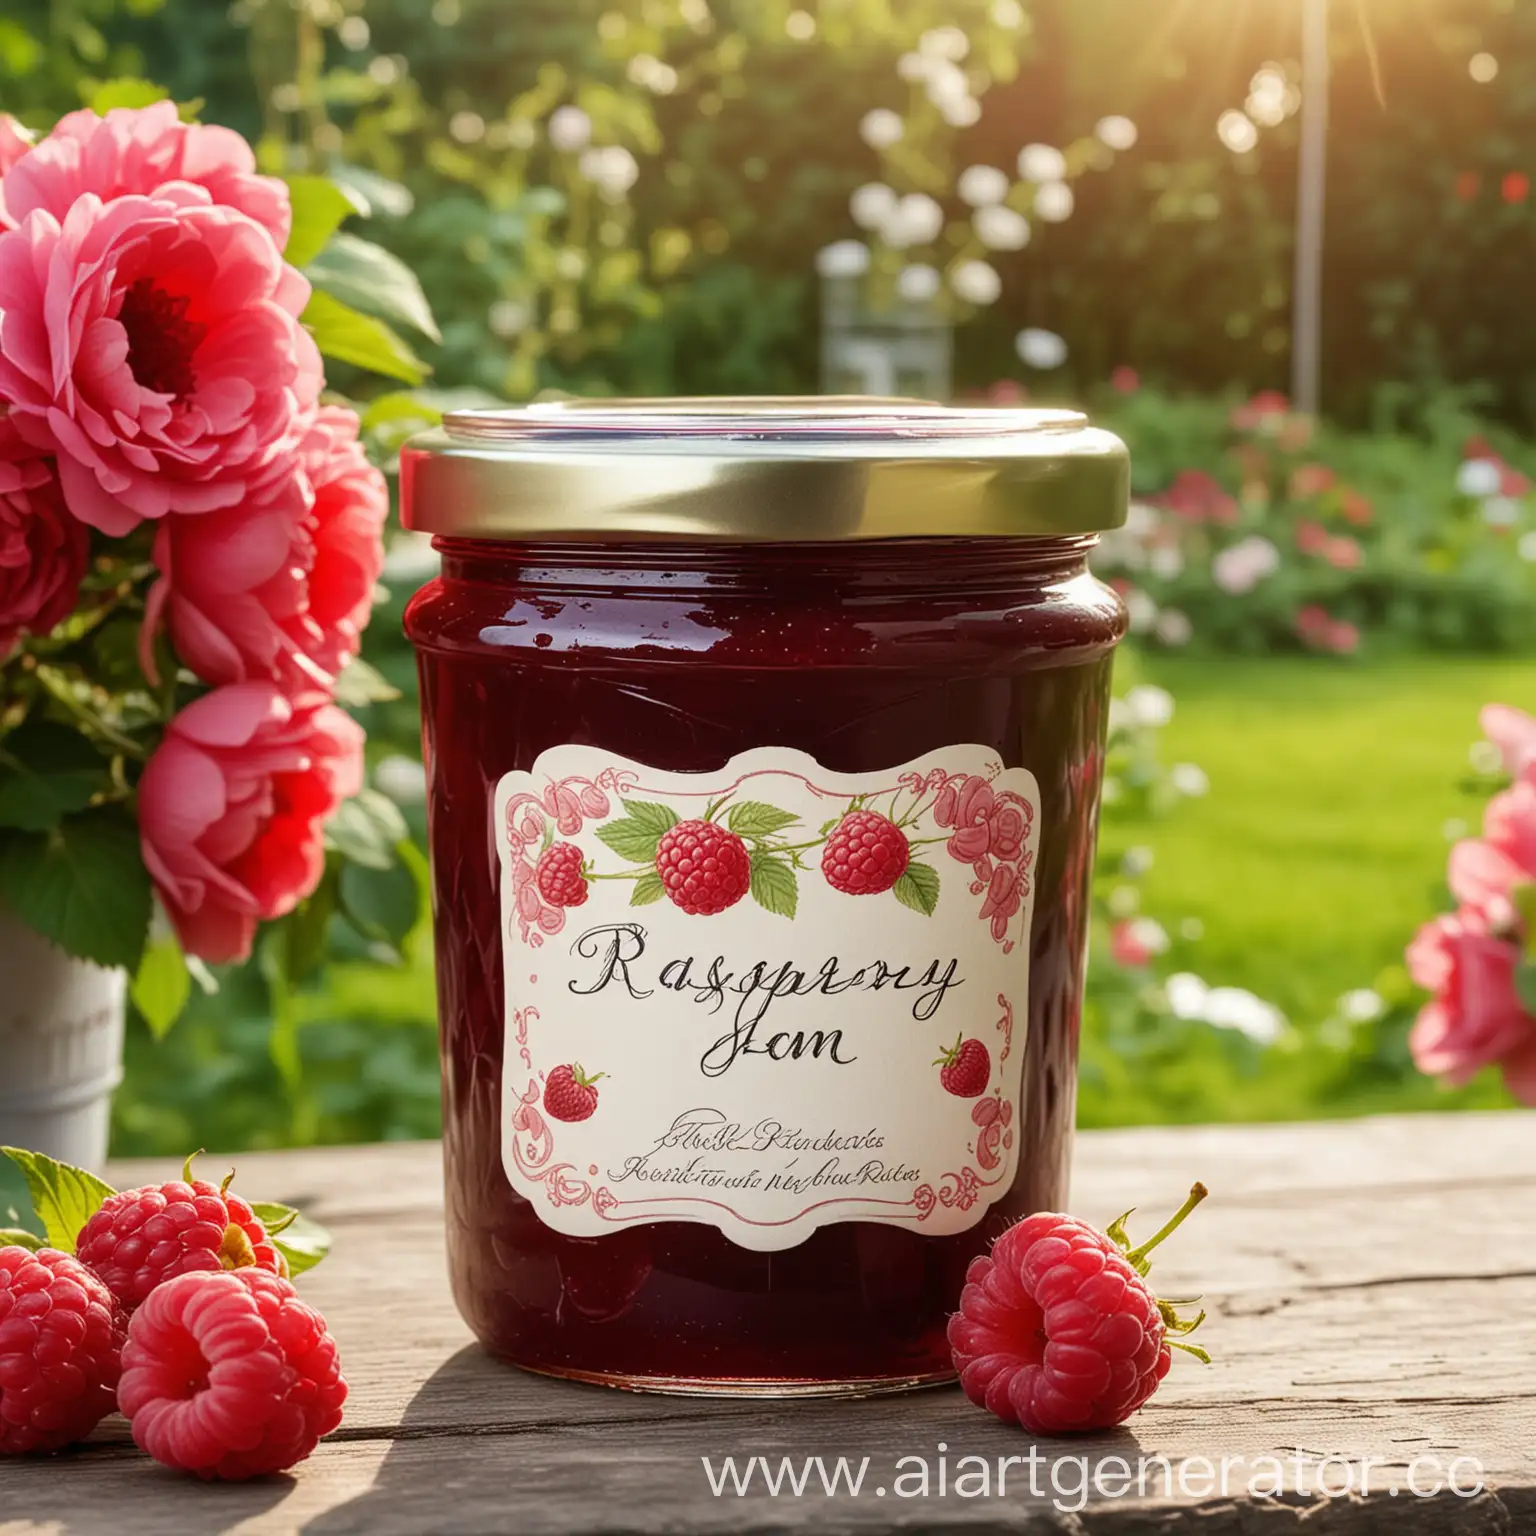 Jar-of-Raspberry-Jam-with-Fresh-Raspberries-on-Garden-Table